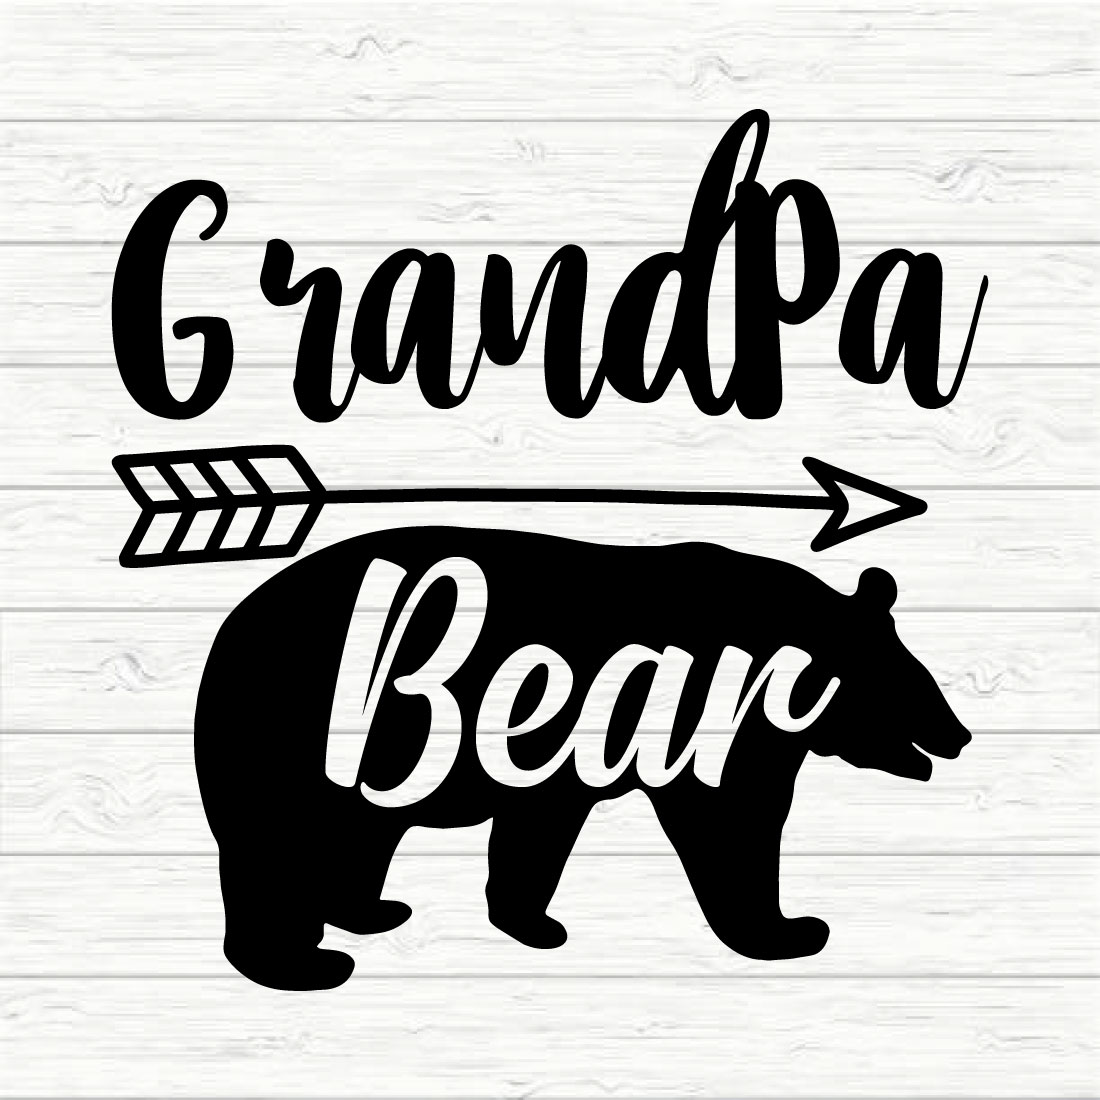 Grandpa Bear preview image.